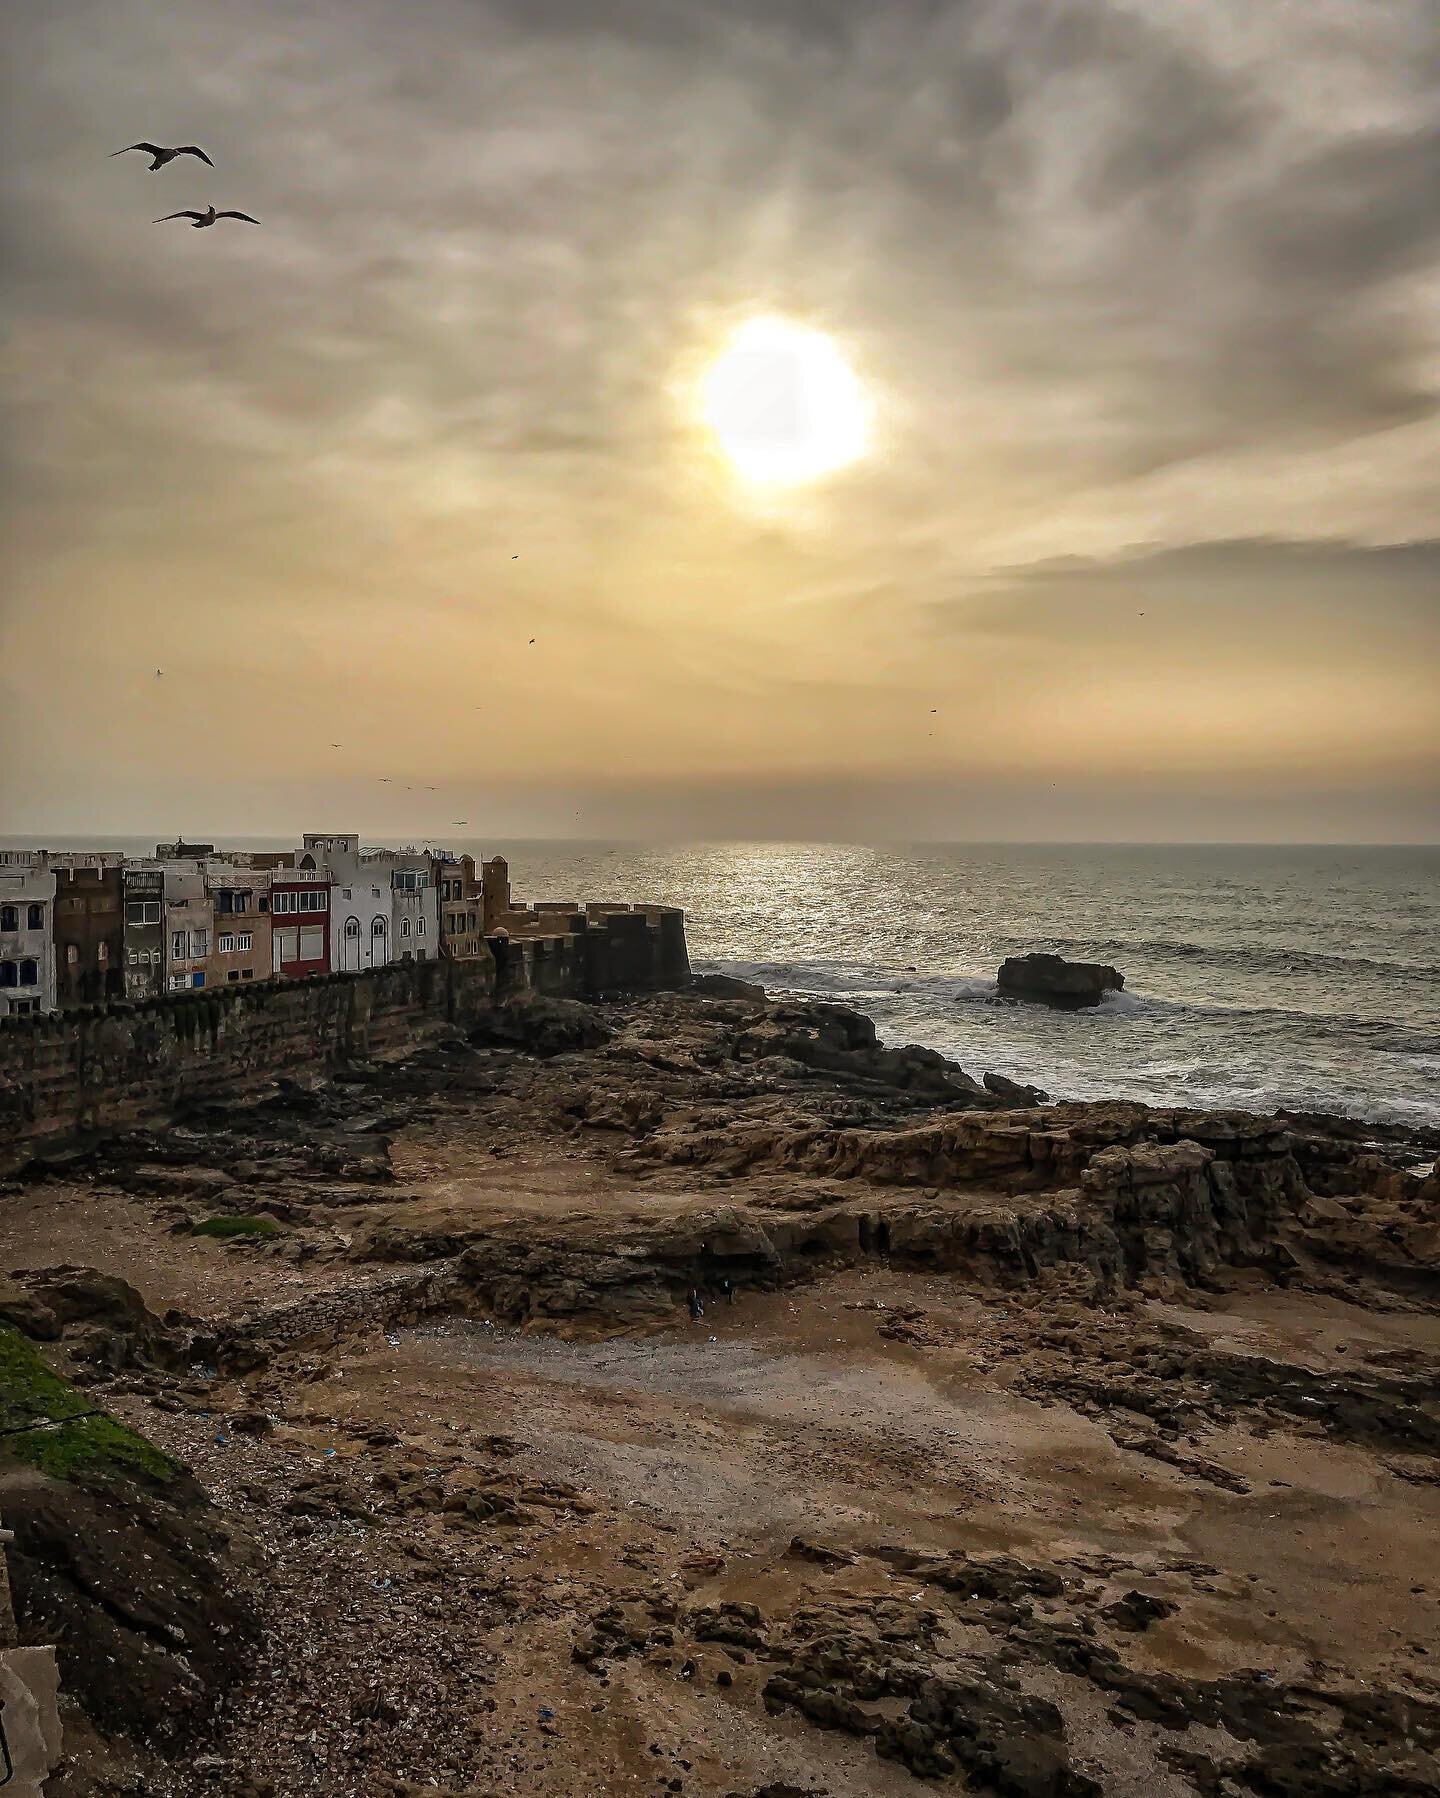 #morocco #essaouira #33trekking #livelaughlove #travel #adventure #backpacking #explore #photography #travelphotography #blog #nomadic #liveauthentic #worldtravel #artofvisuals #scenic #natgeo  #danajonchappelle #shotoniphone #sunset